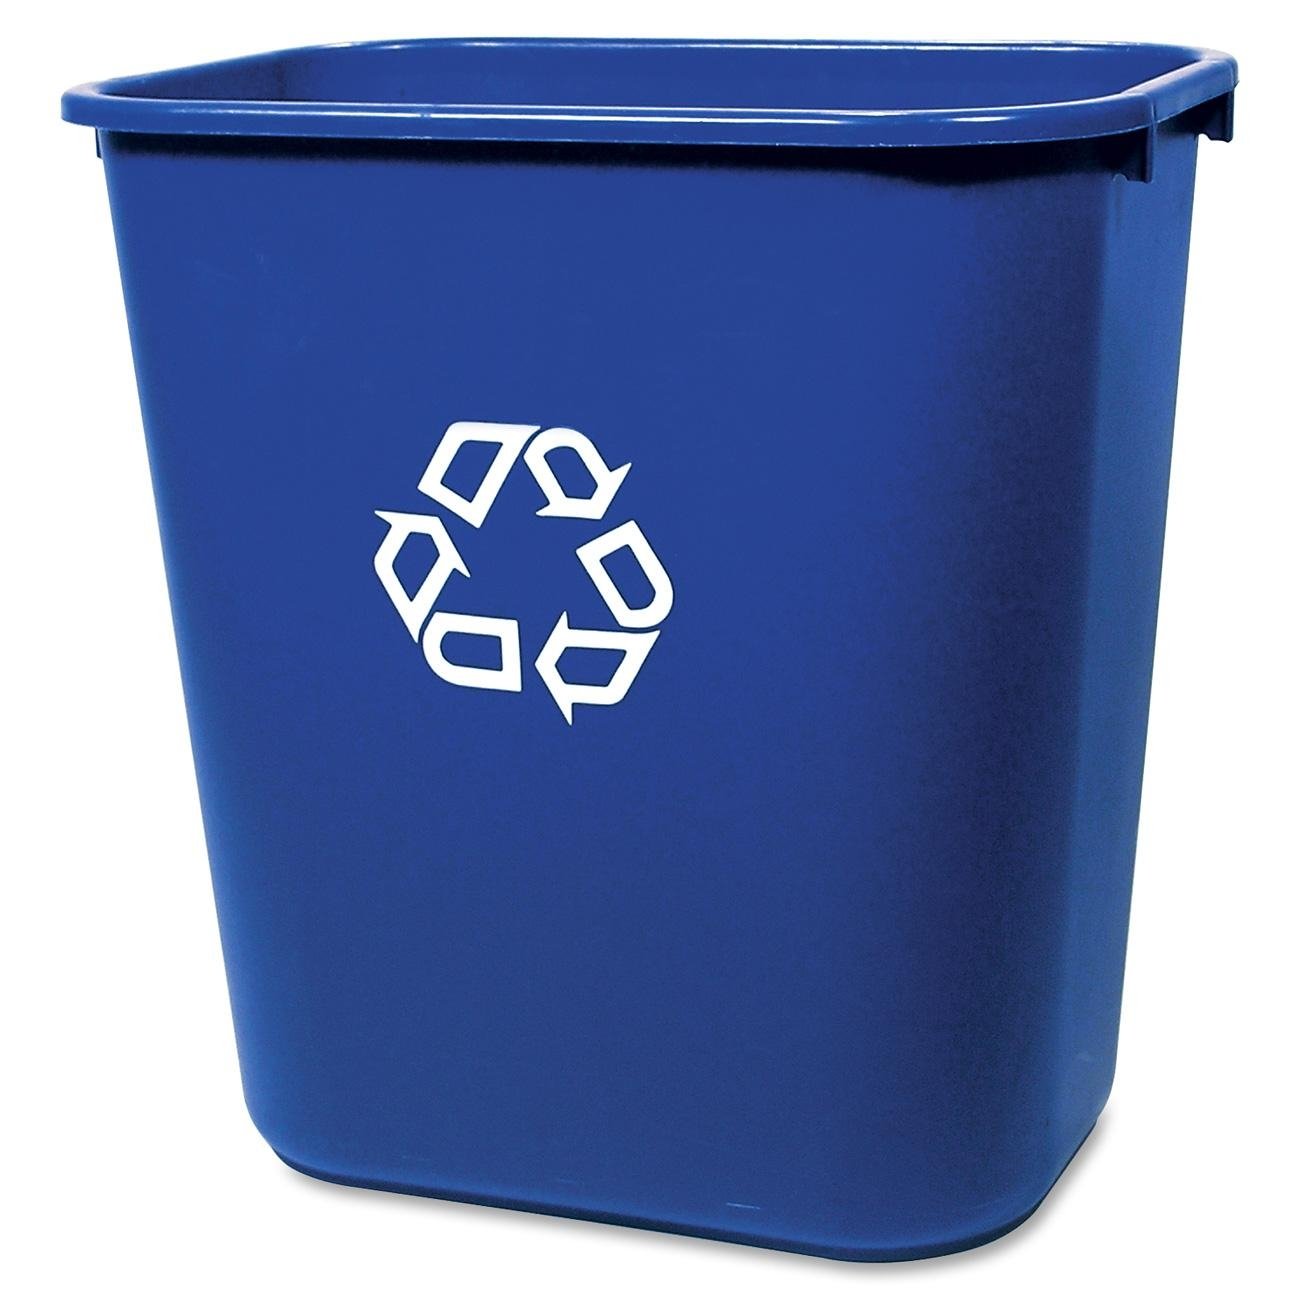 Rubbermaid 2956-73 Deskside Recycling Container Bin